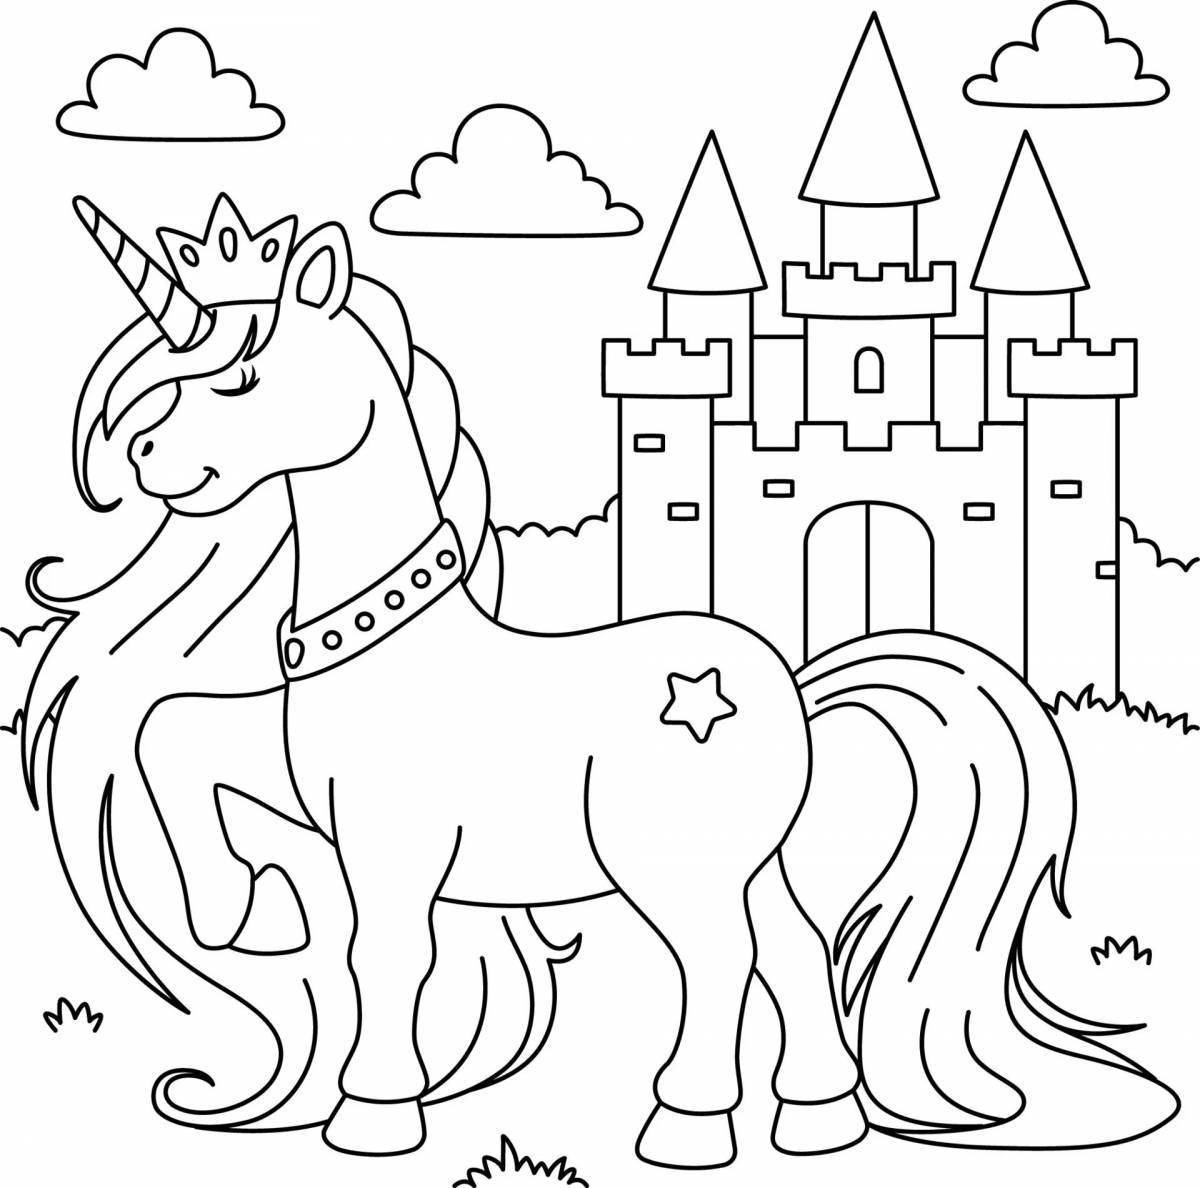 Joyful coloring clock unicorn